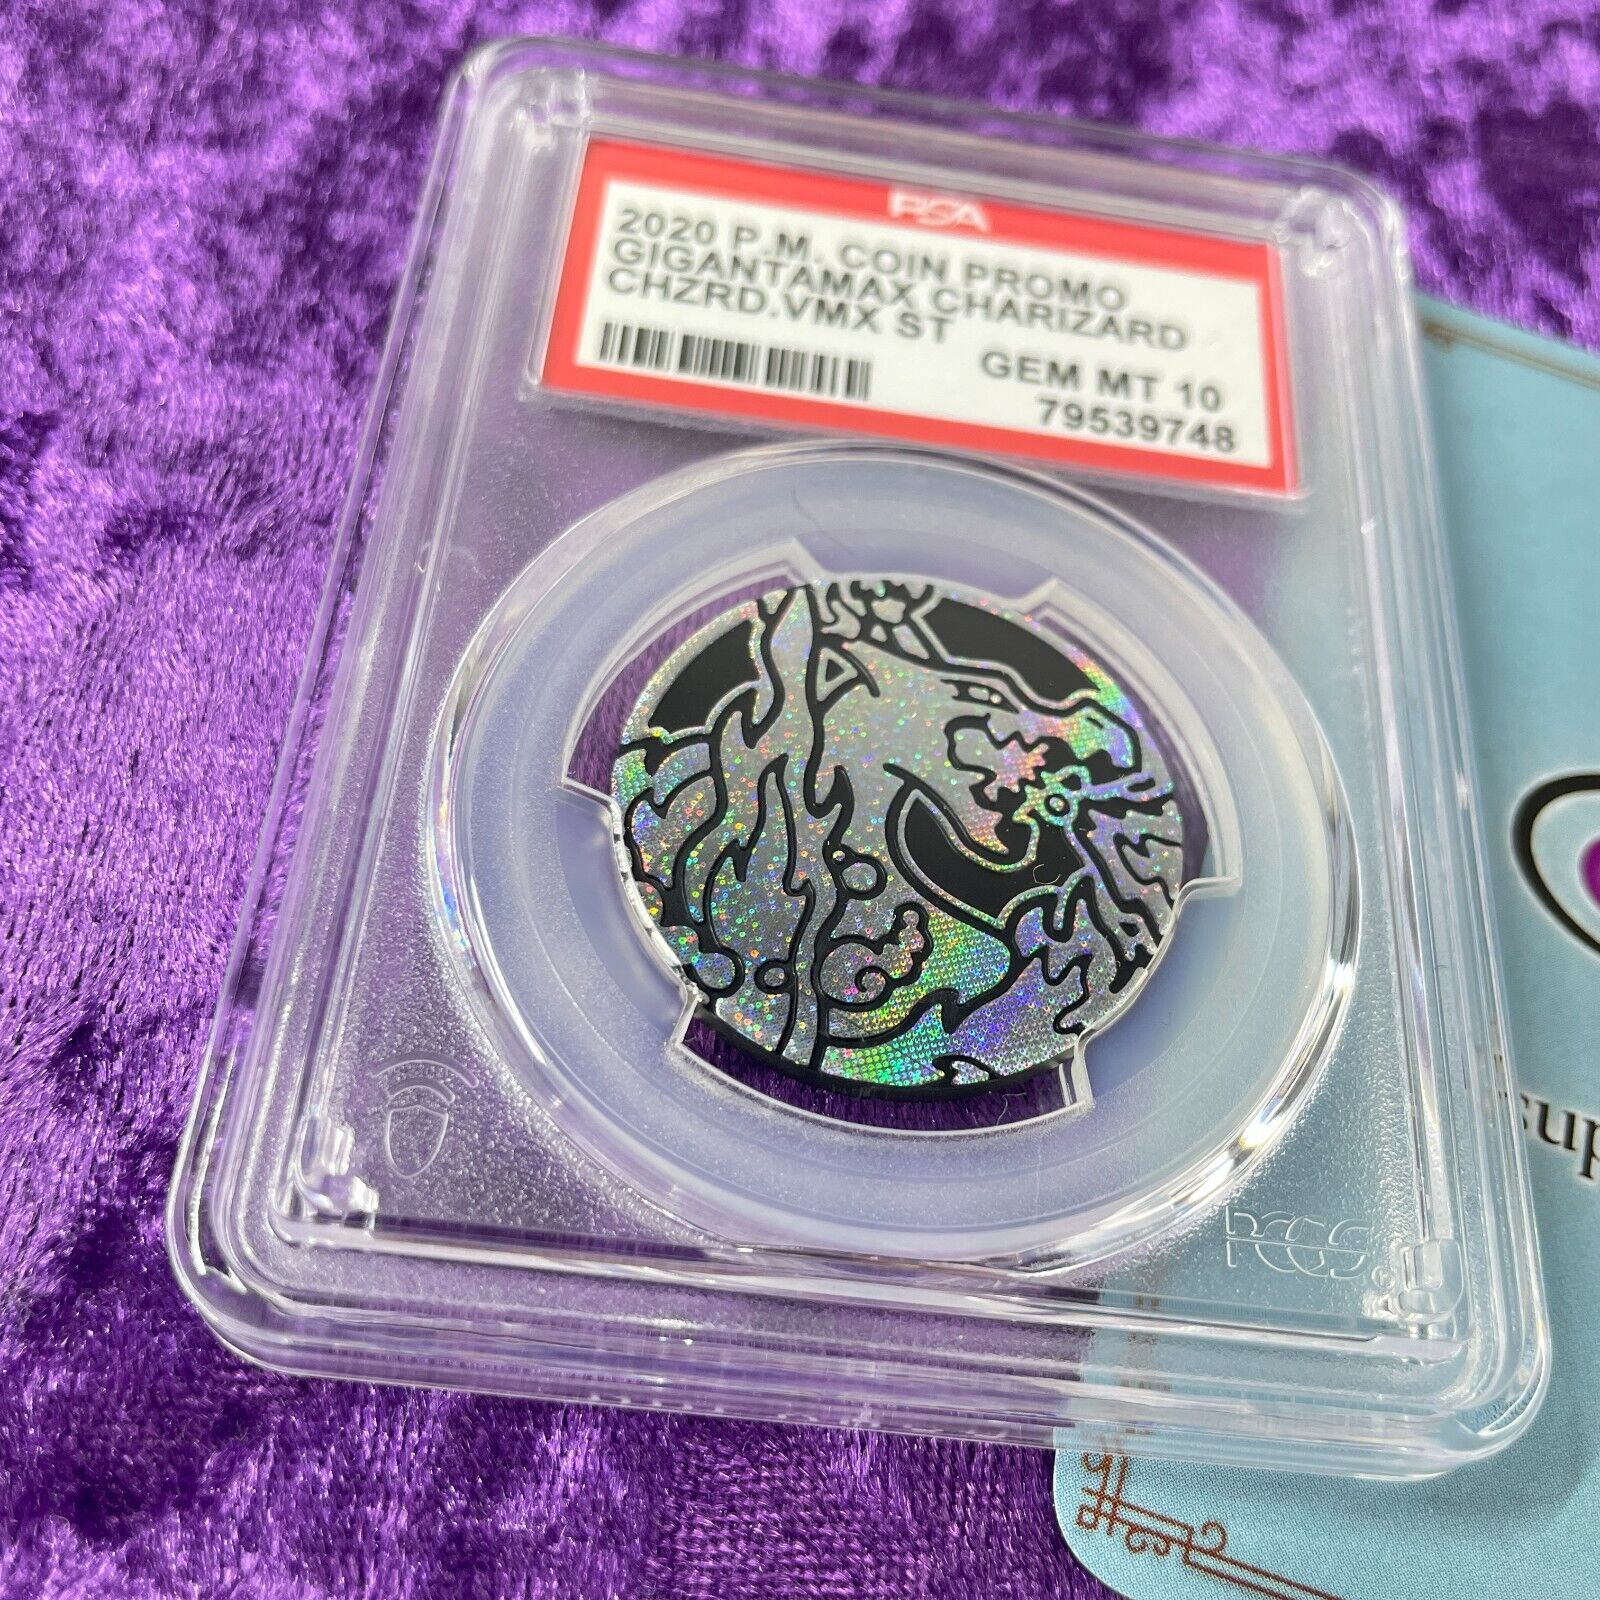 PSA 10 2020 Gigantamax Charizard Pokemon Japanese Coin Promo Gem Mint Pokecoin